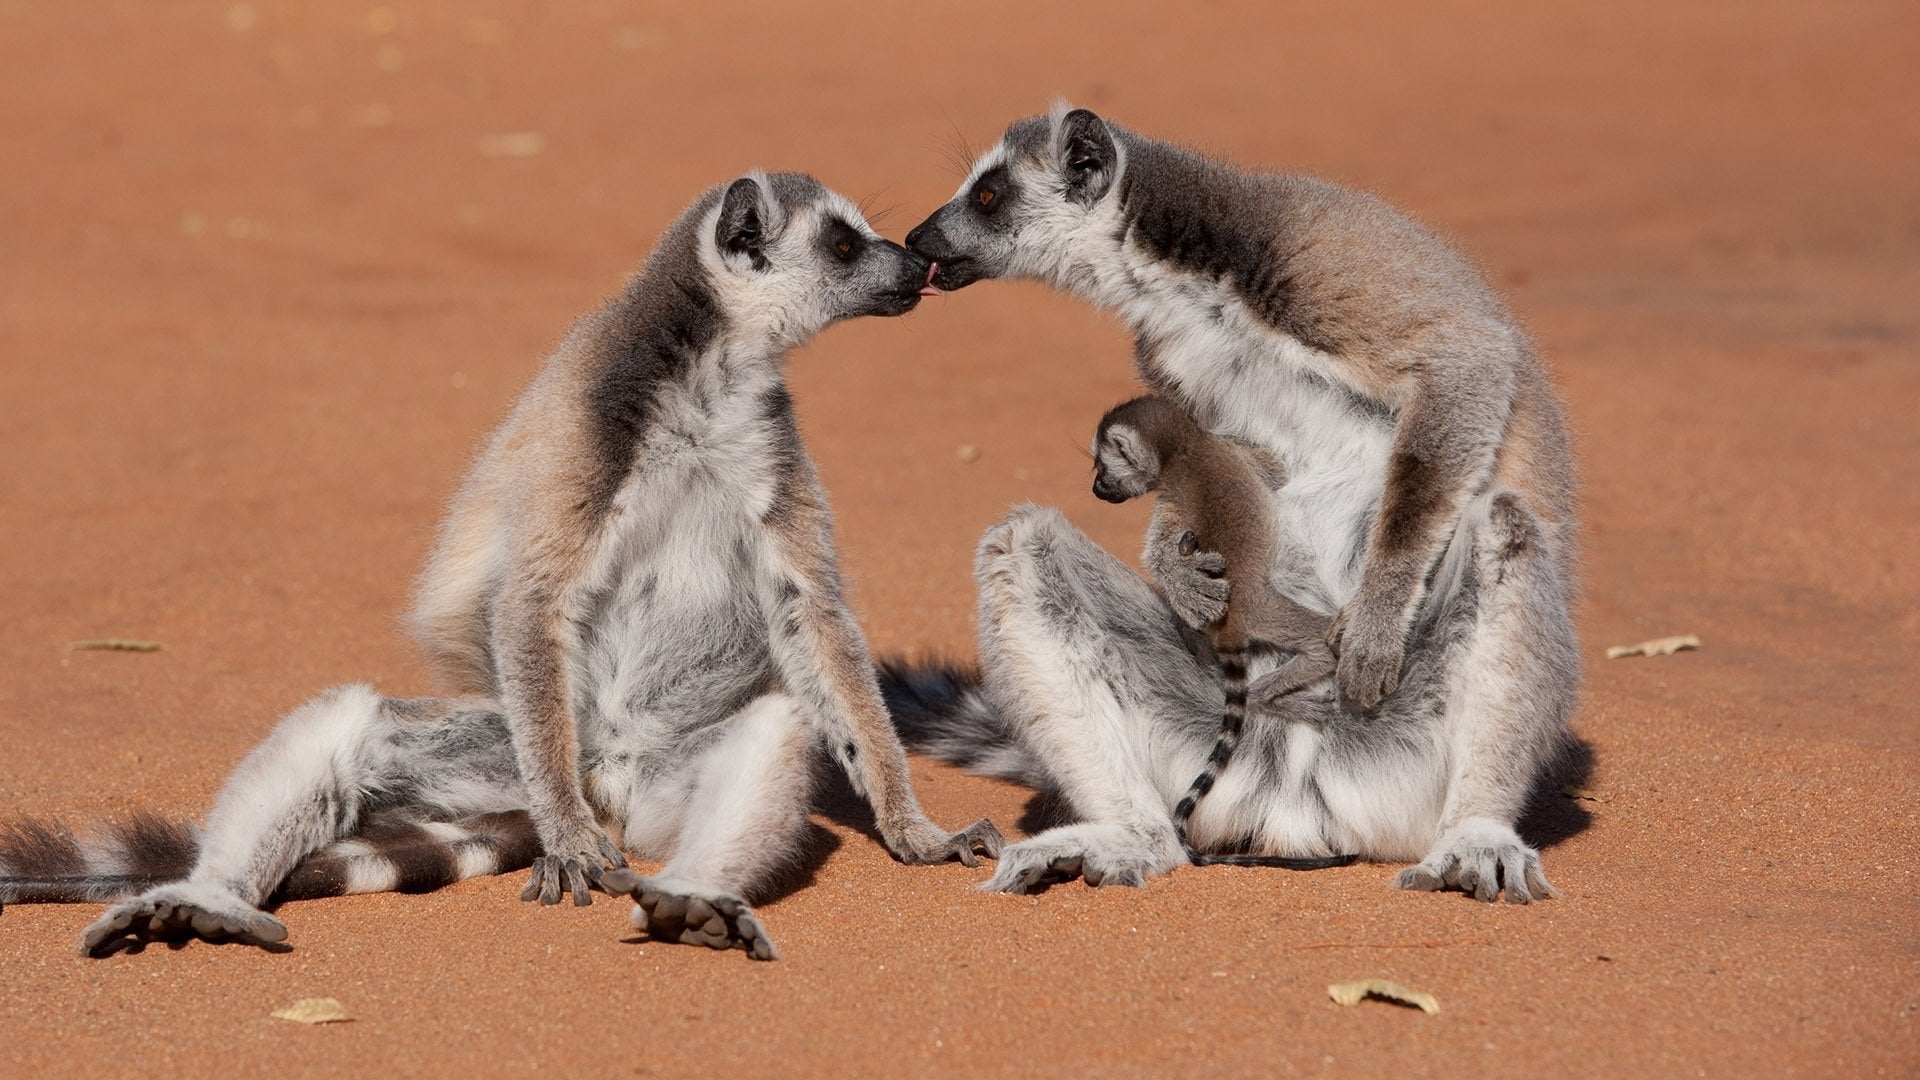 Island of Lemurs: Madagascar 2014 123movies